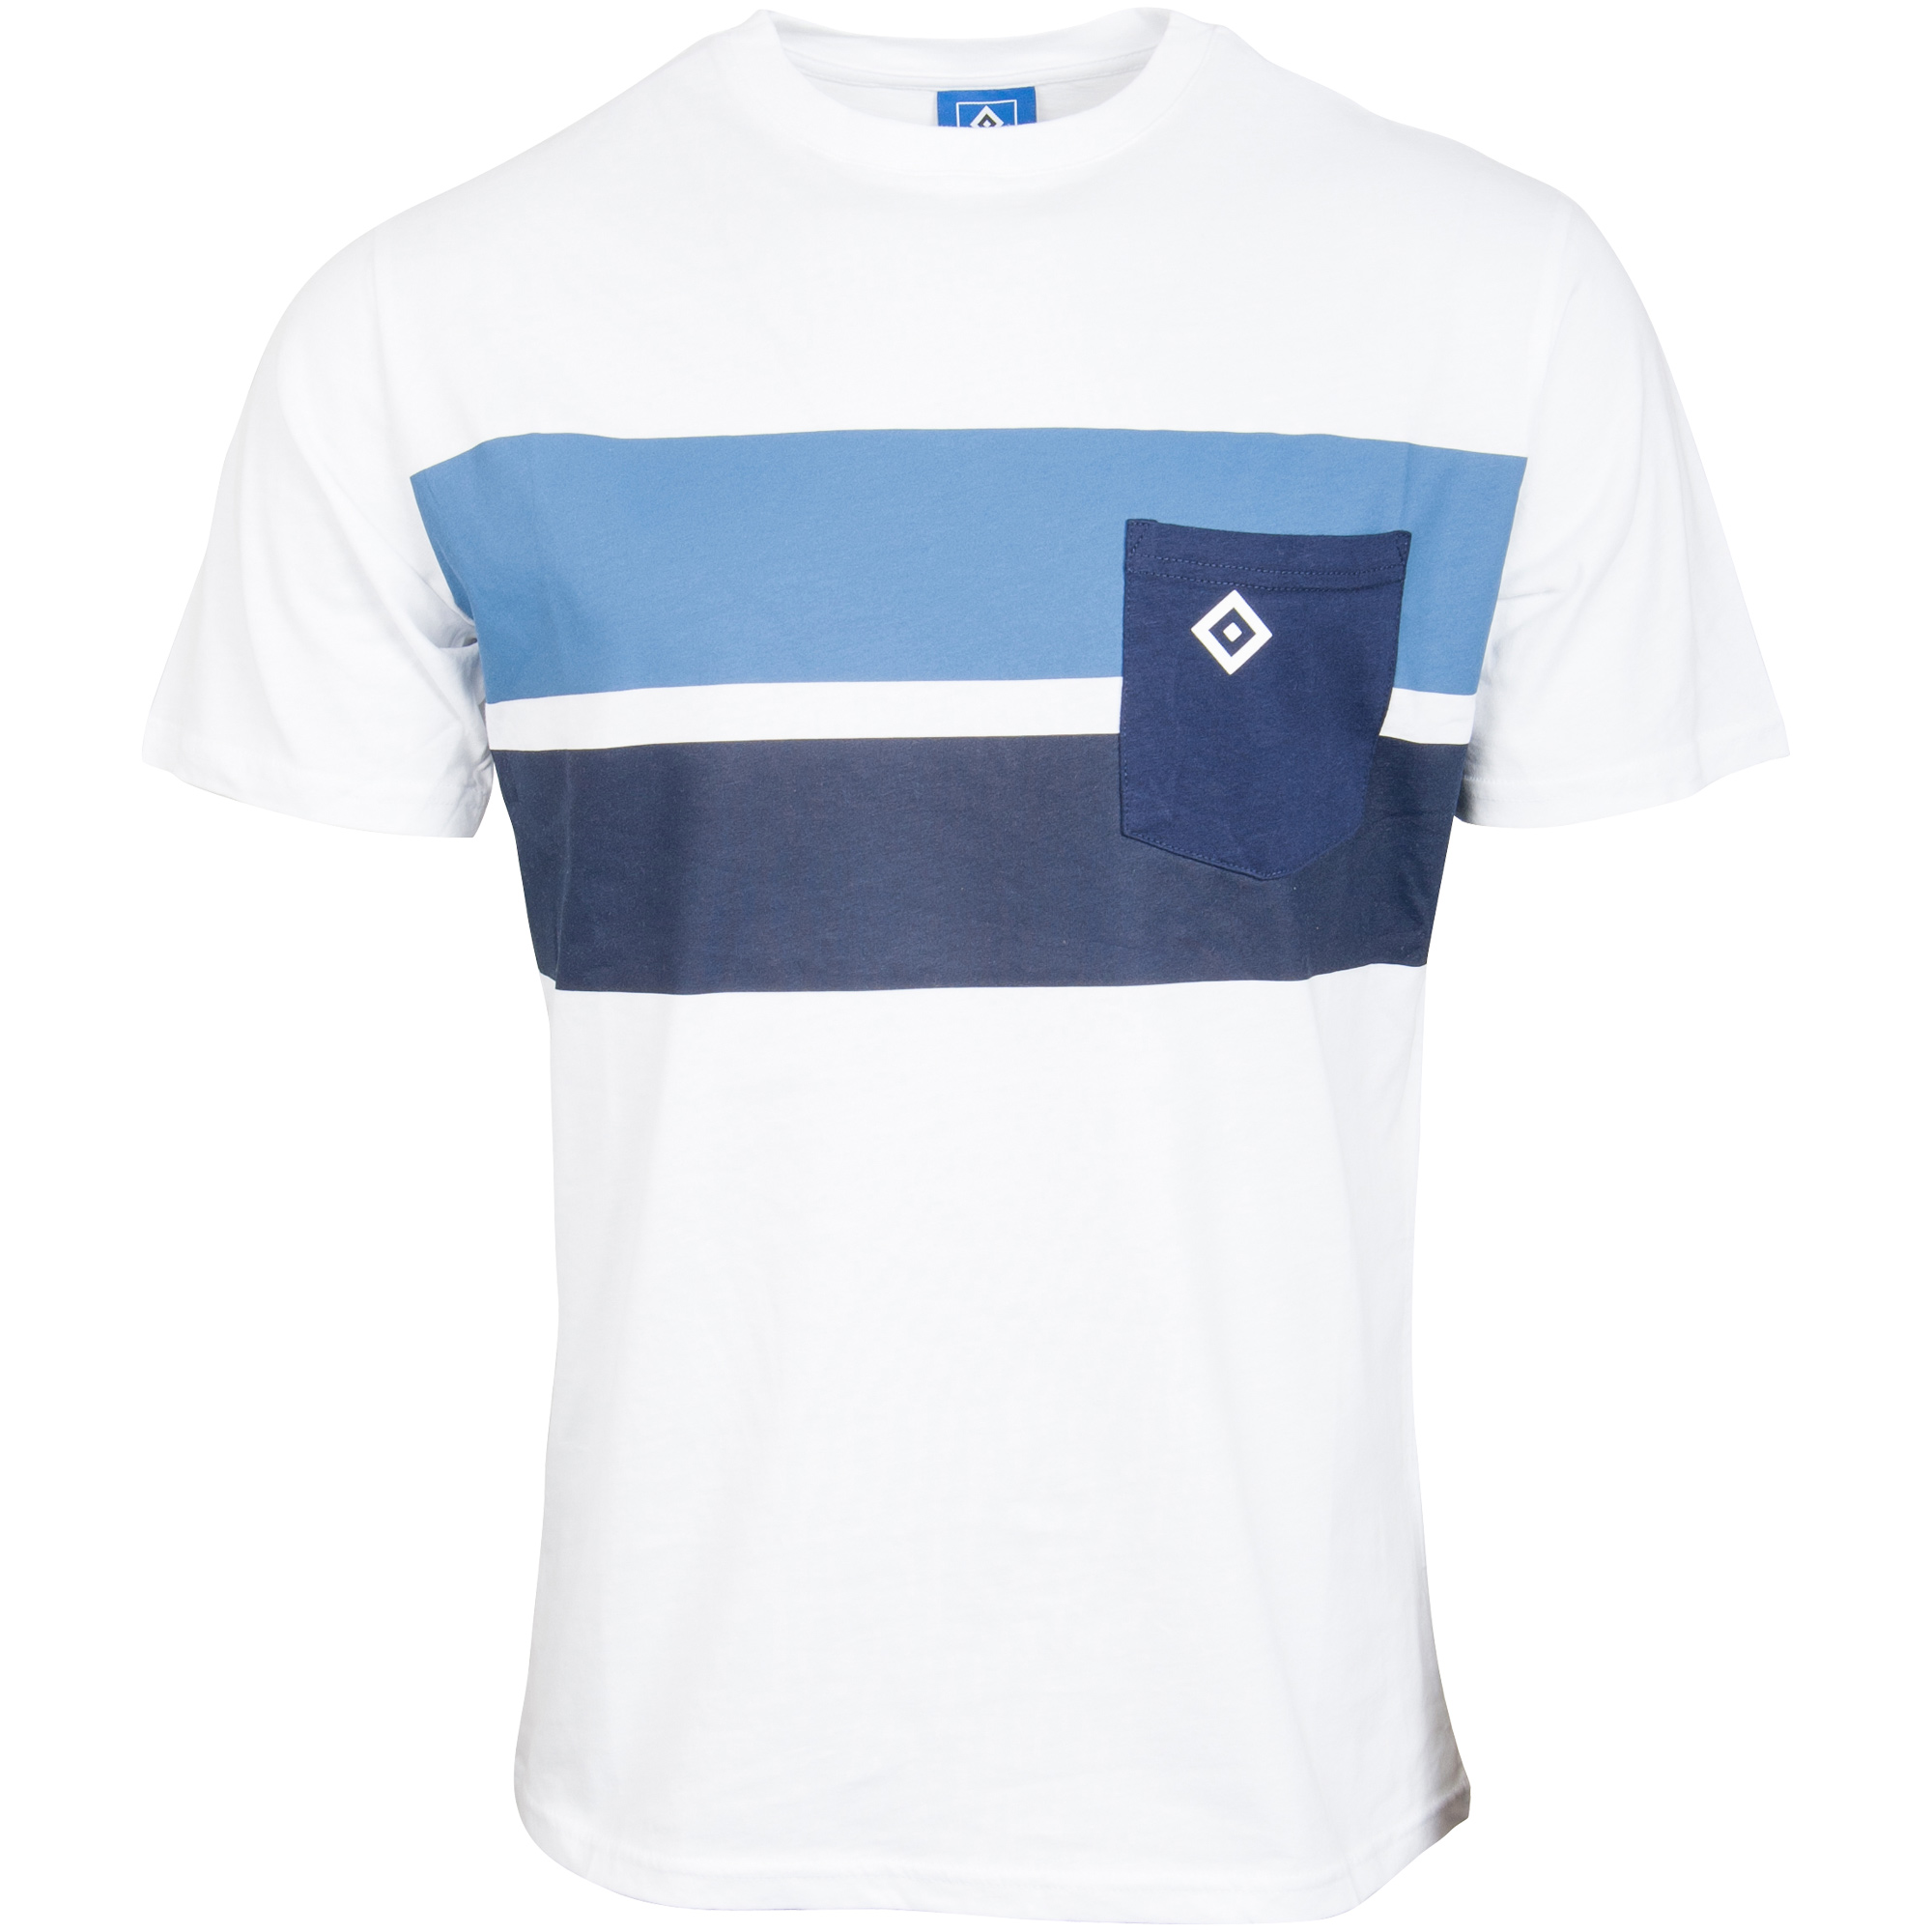 Hamburger SV T-Shirt "Matteo" - multicolor